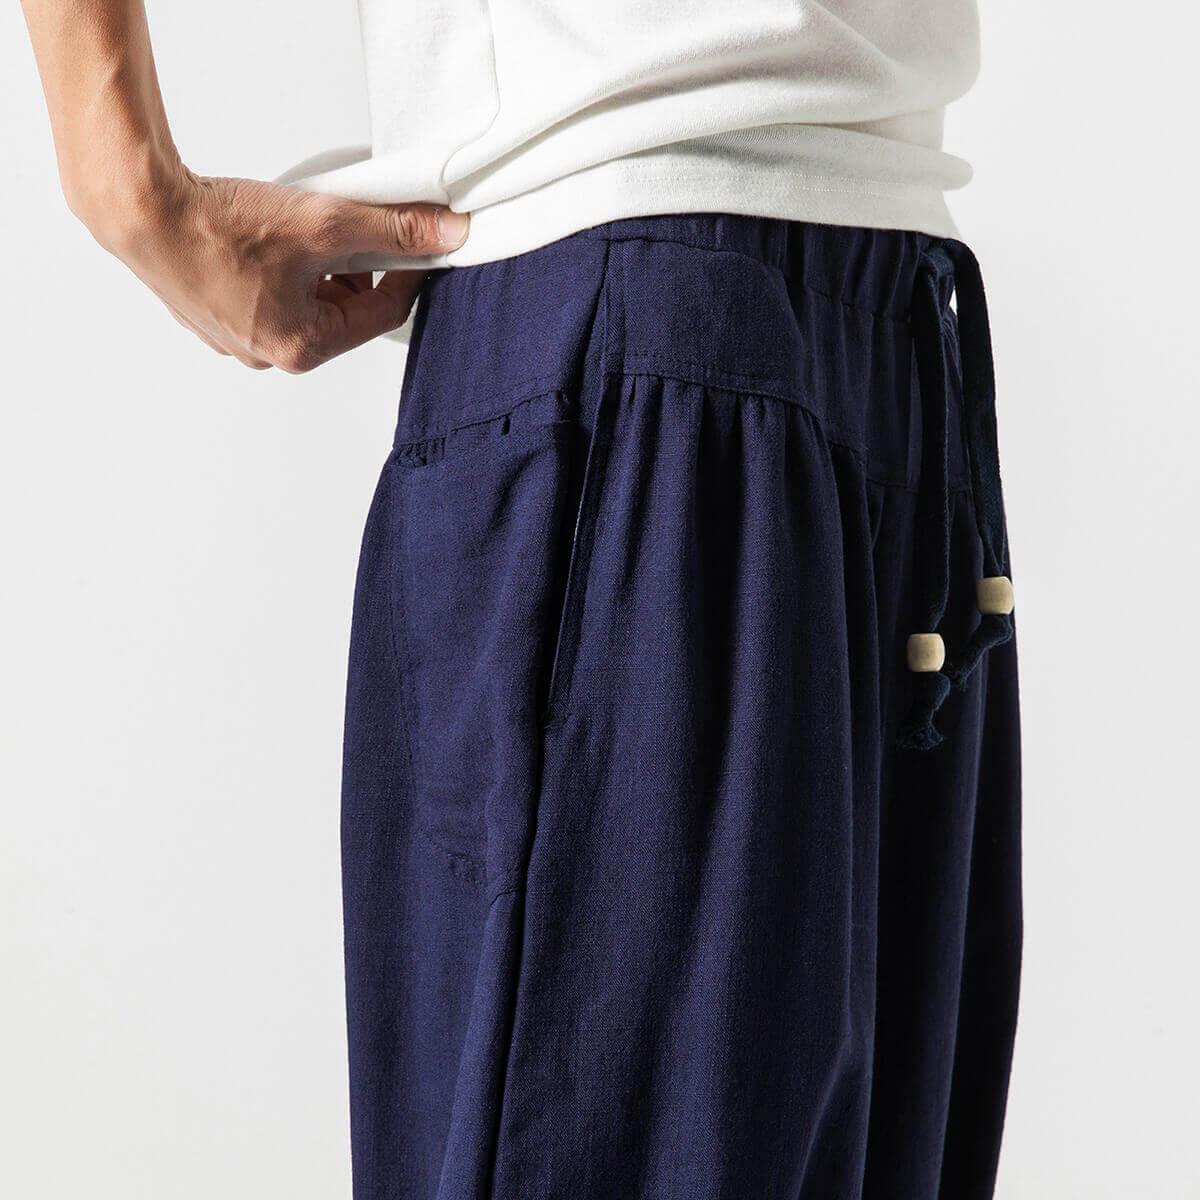 Tabi Harem Pants - Kyoto Apparel - Black, Blue, drawstrings, pants, Red